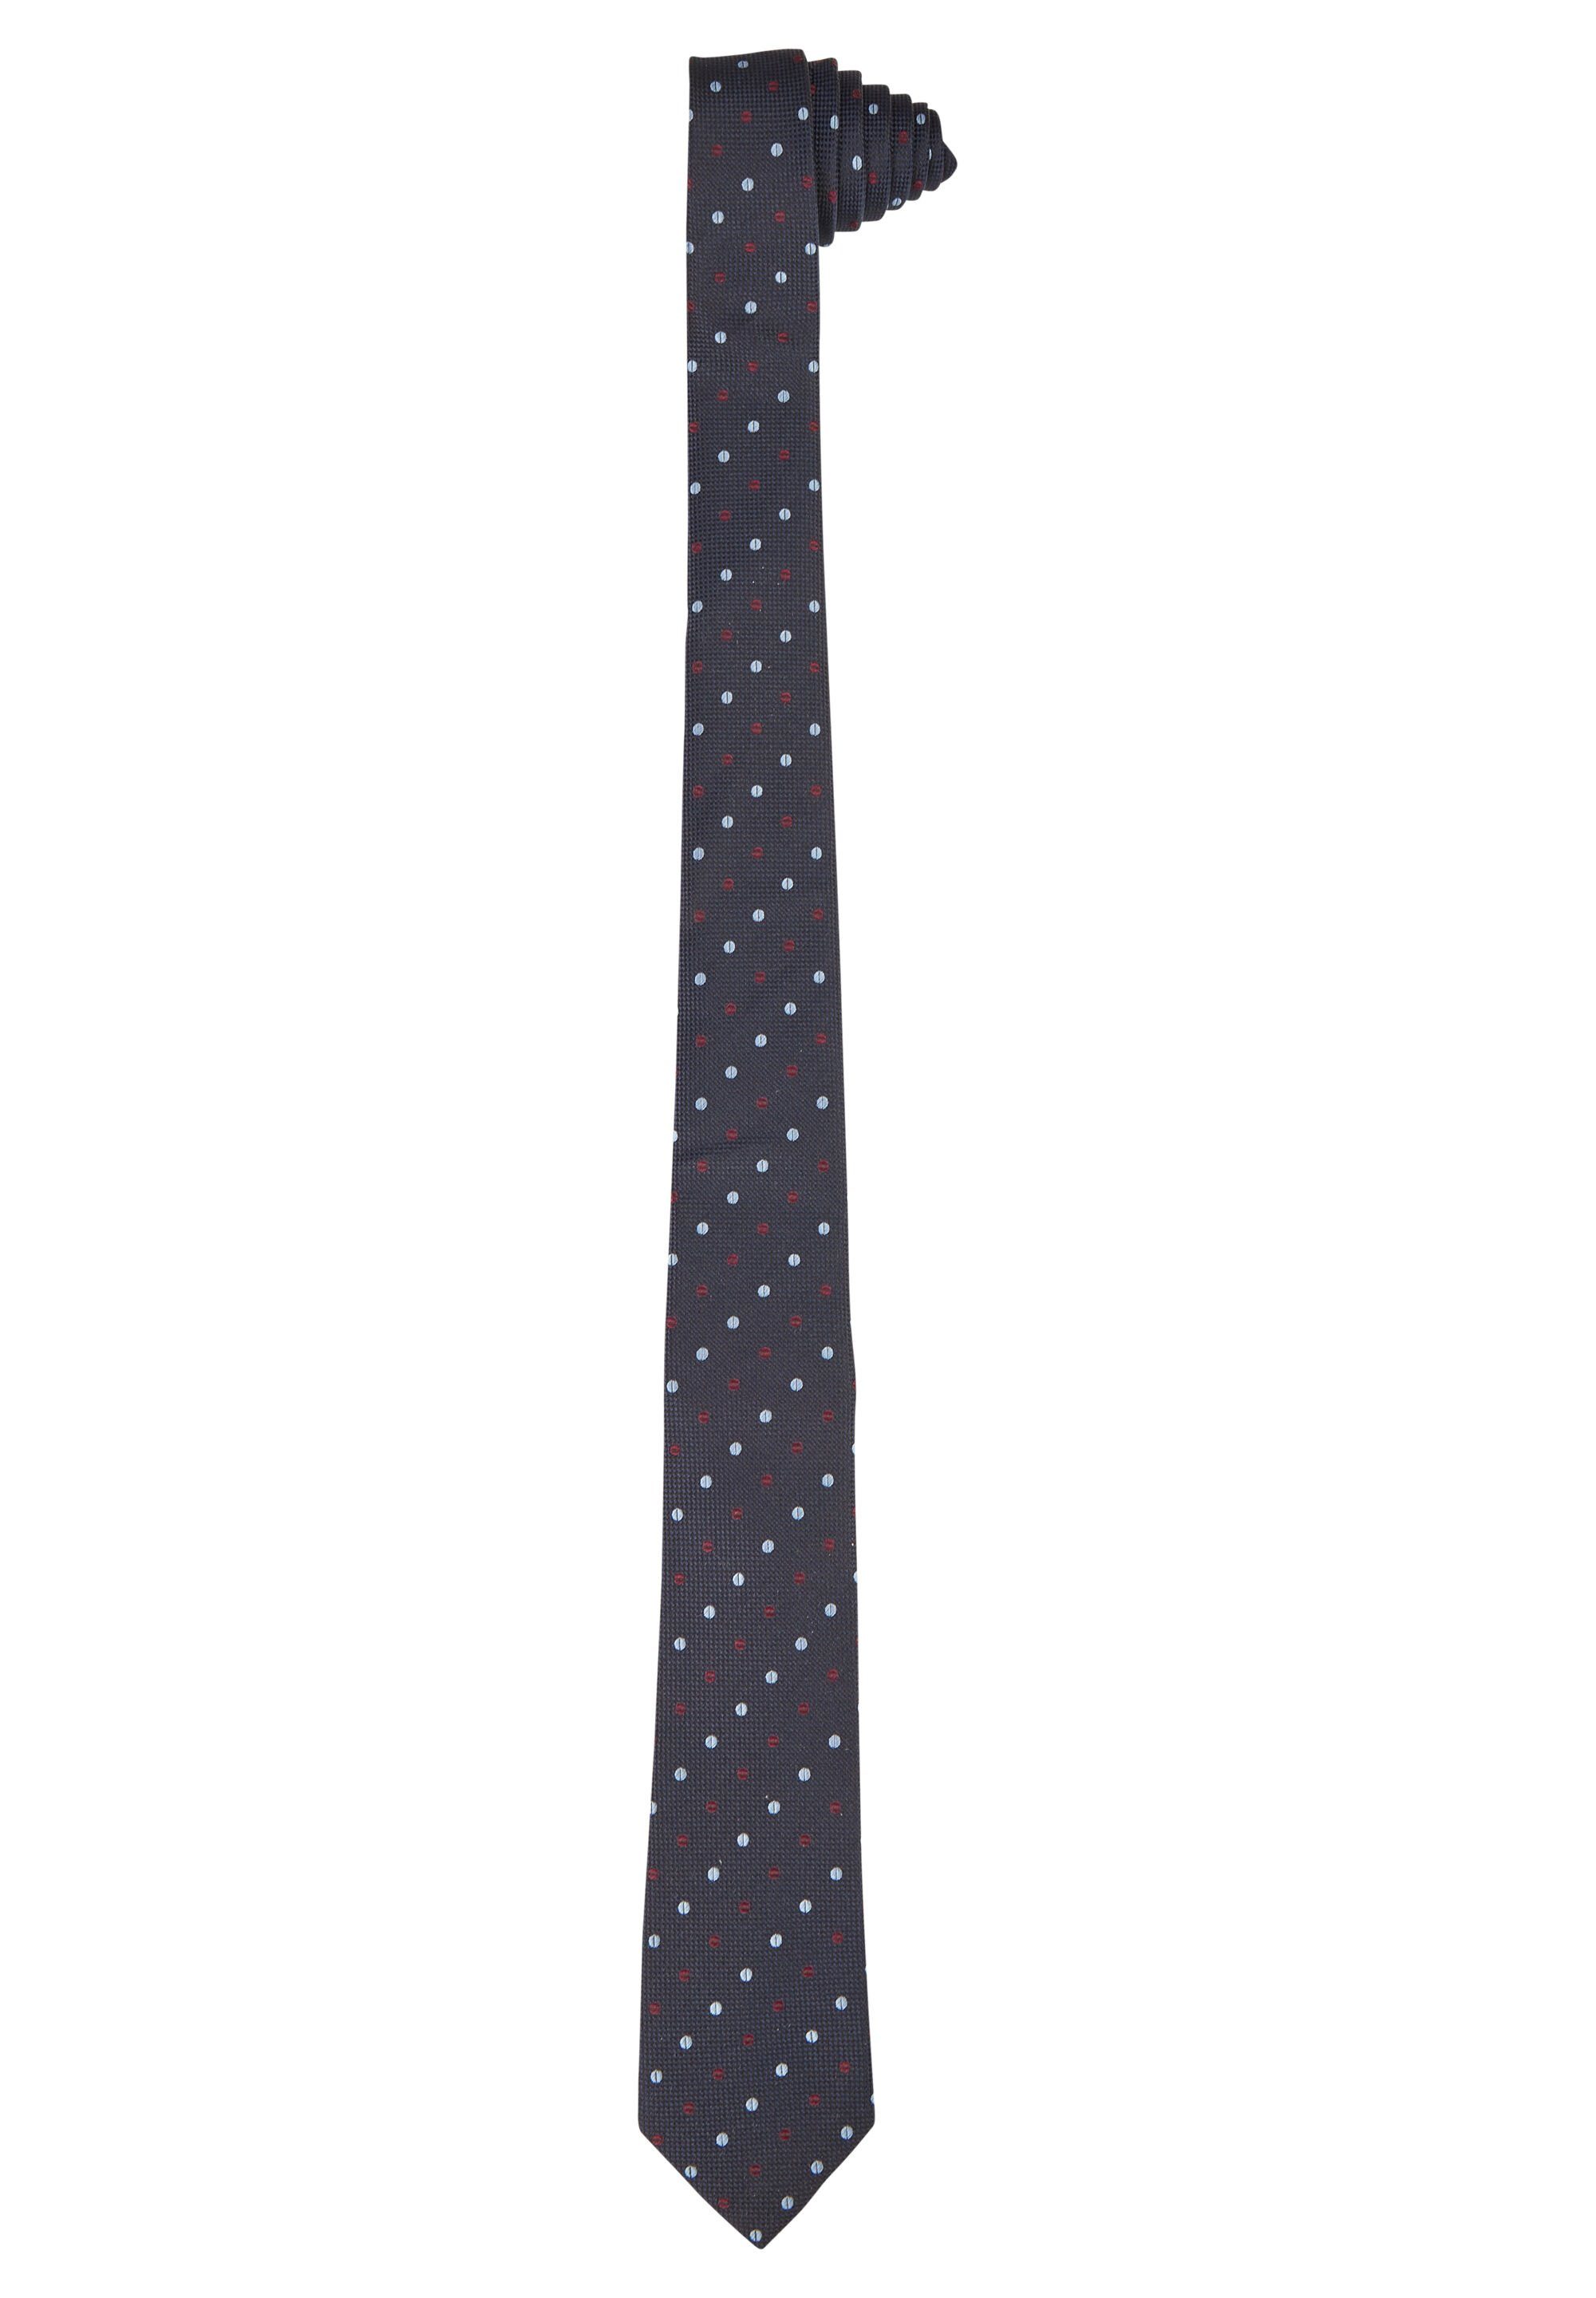 Krawatte modernem navy mit PARIS HECHTER Muster